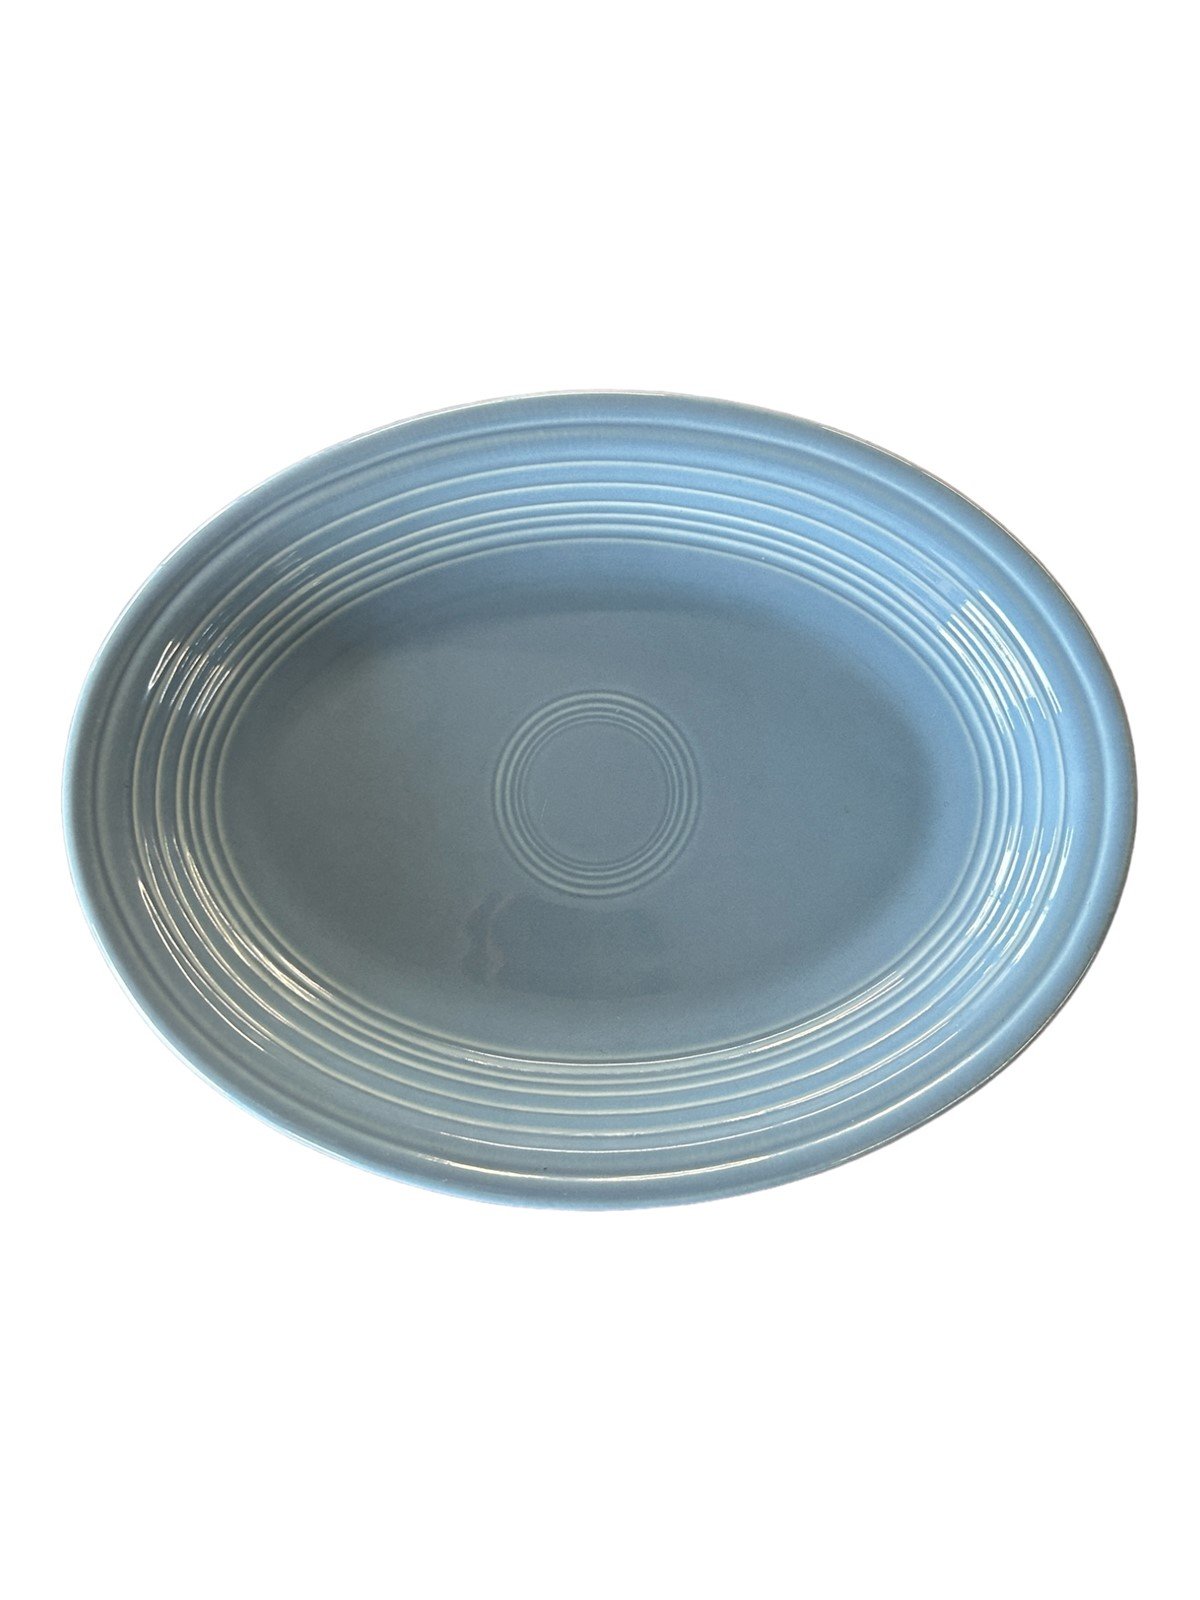 Fiesta - Periwinkle Blue Medium Oval Platter Homer Laughlin Ceramic Serving Dish